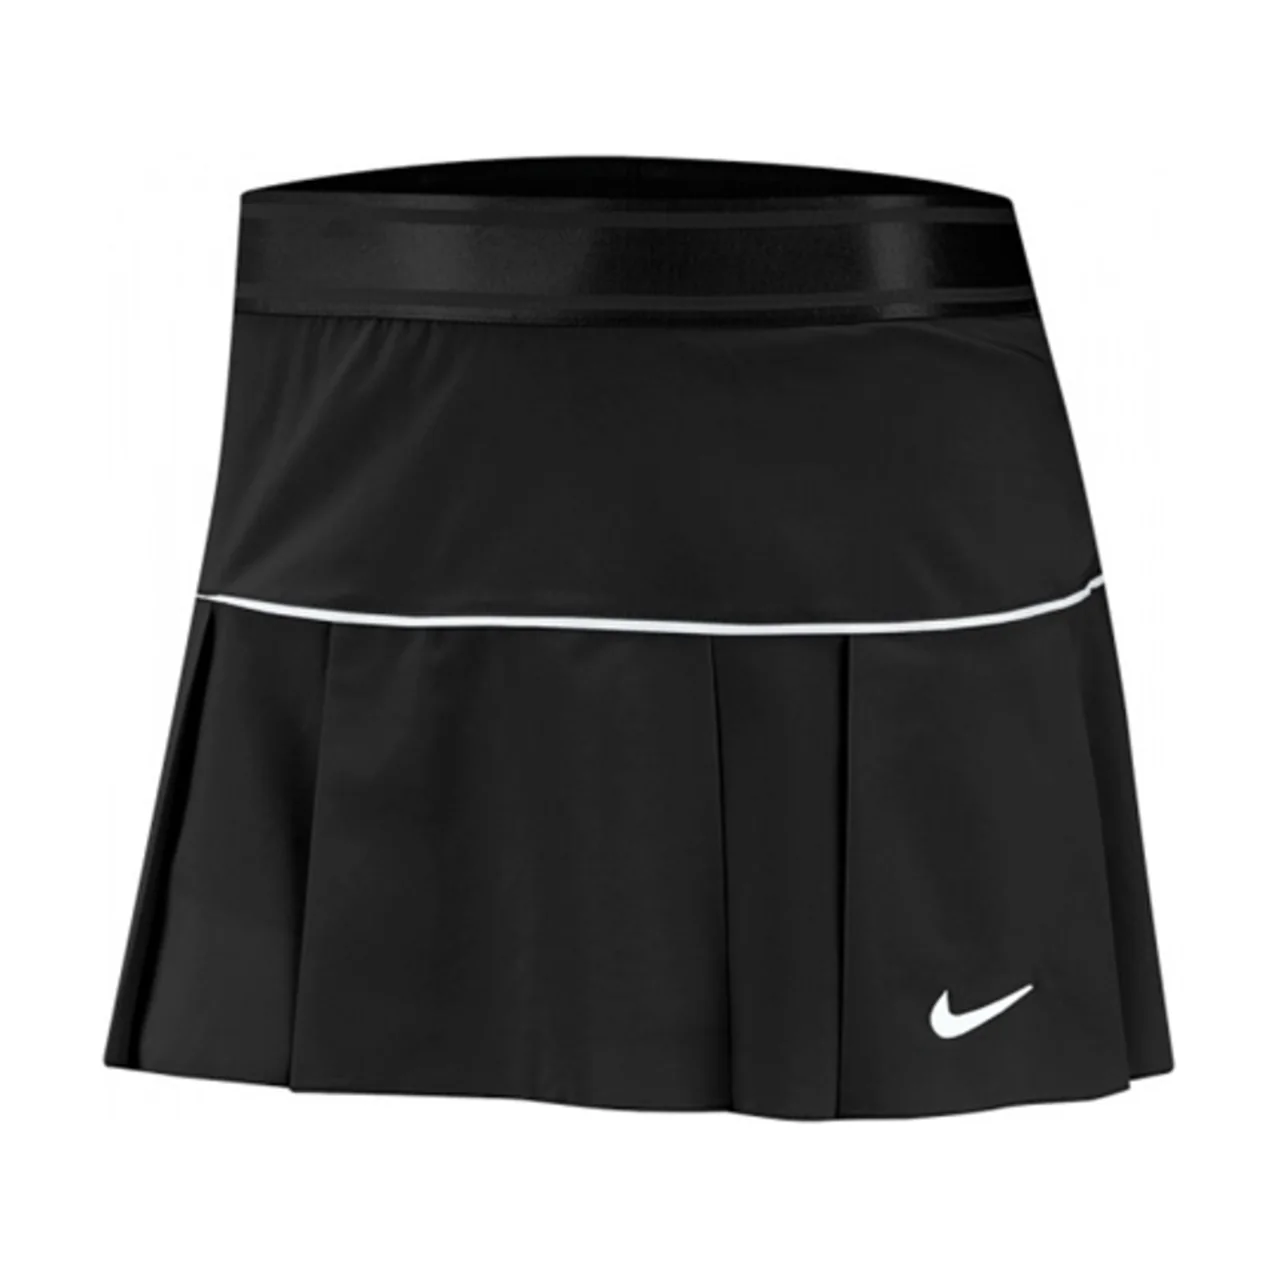 Nike Performance Victory Skirt Black/White